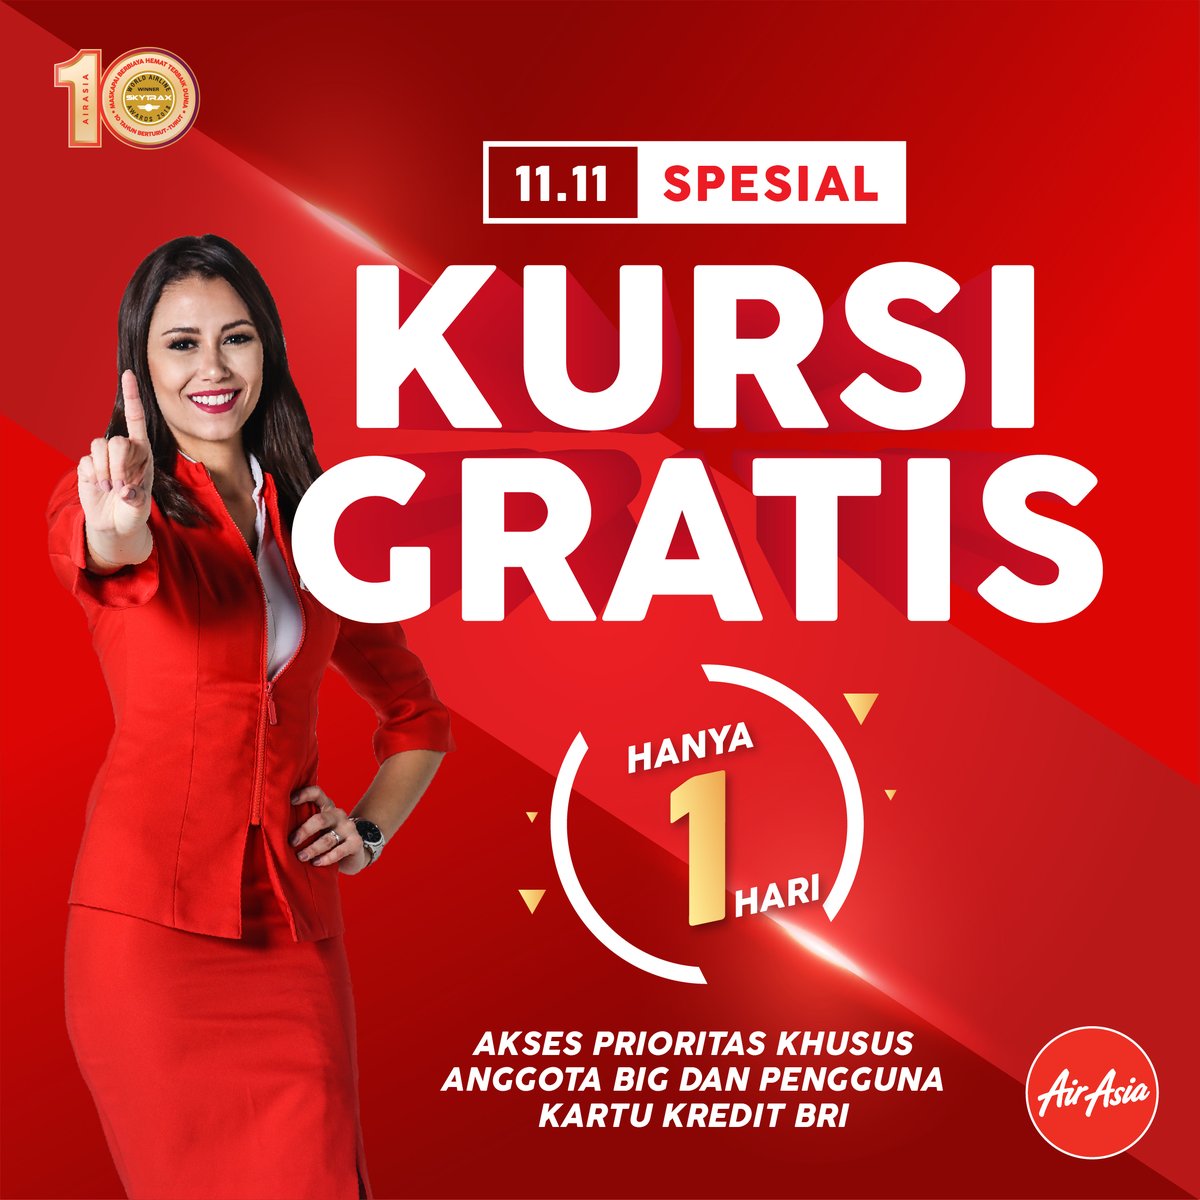 AirAsia - Promo Spesial HARBOLNAS 11.11 5 Juta Kursi Promo Liburan (11 Nov 2018)